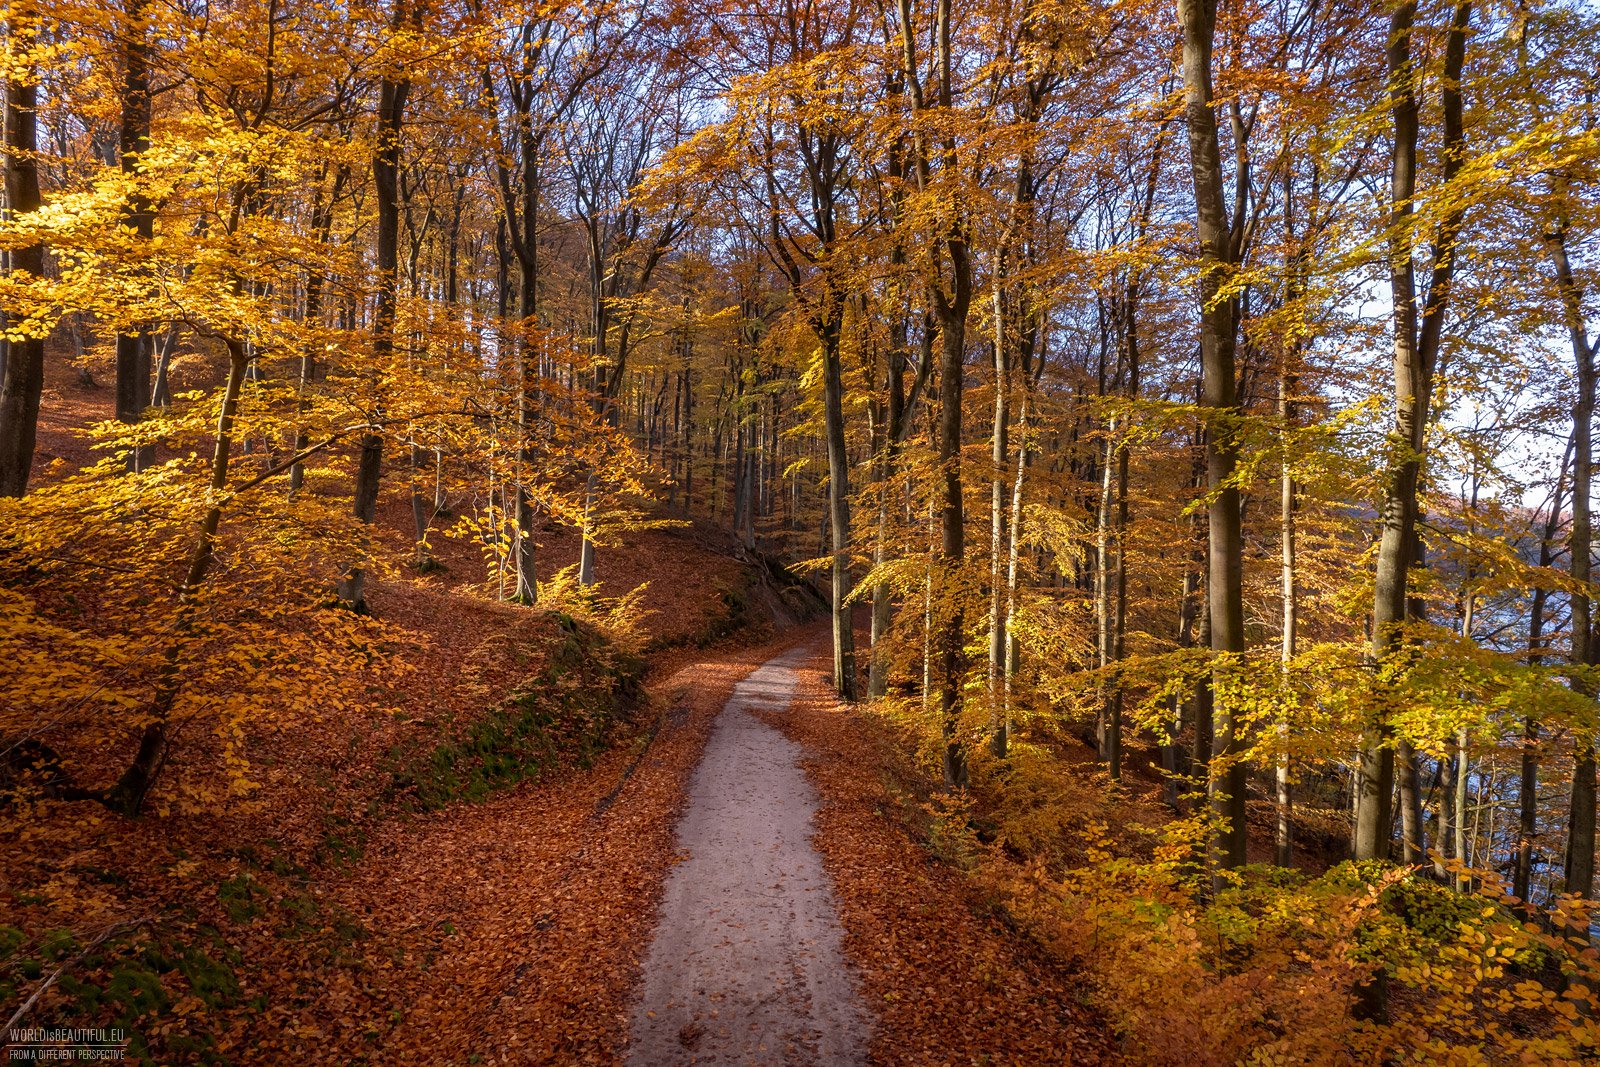 A beech forest in autumn